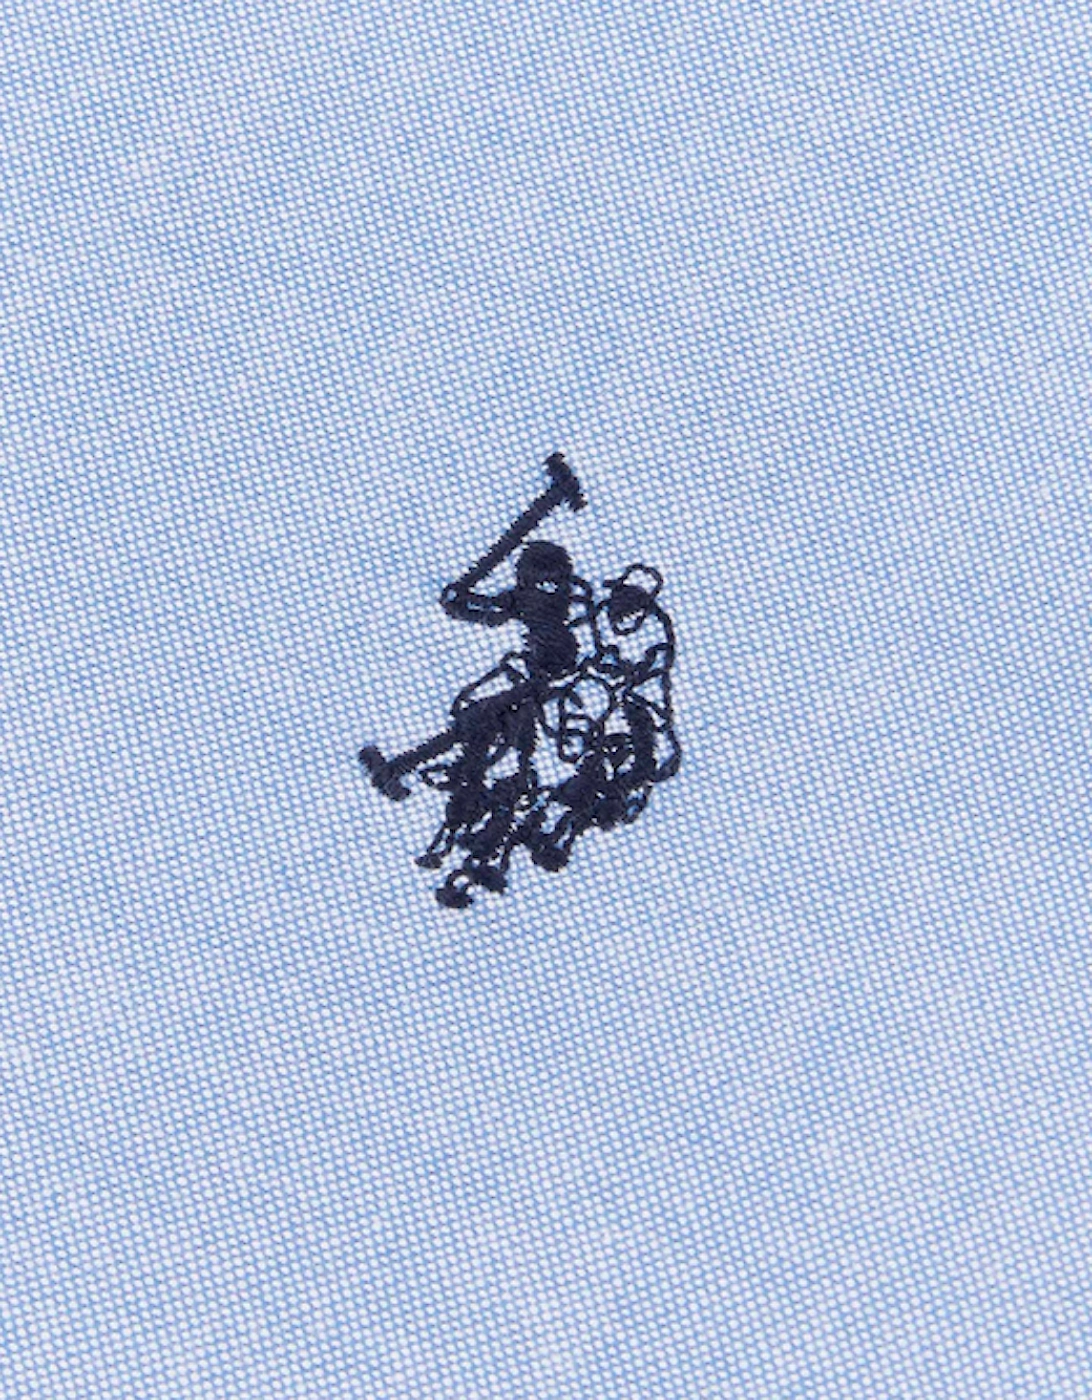 U S Polo Assn Men's Peached Oxford Long Sleeve Shirt Blue Yonder/Dark Sapphire